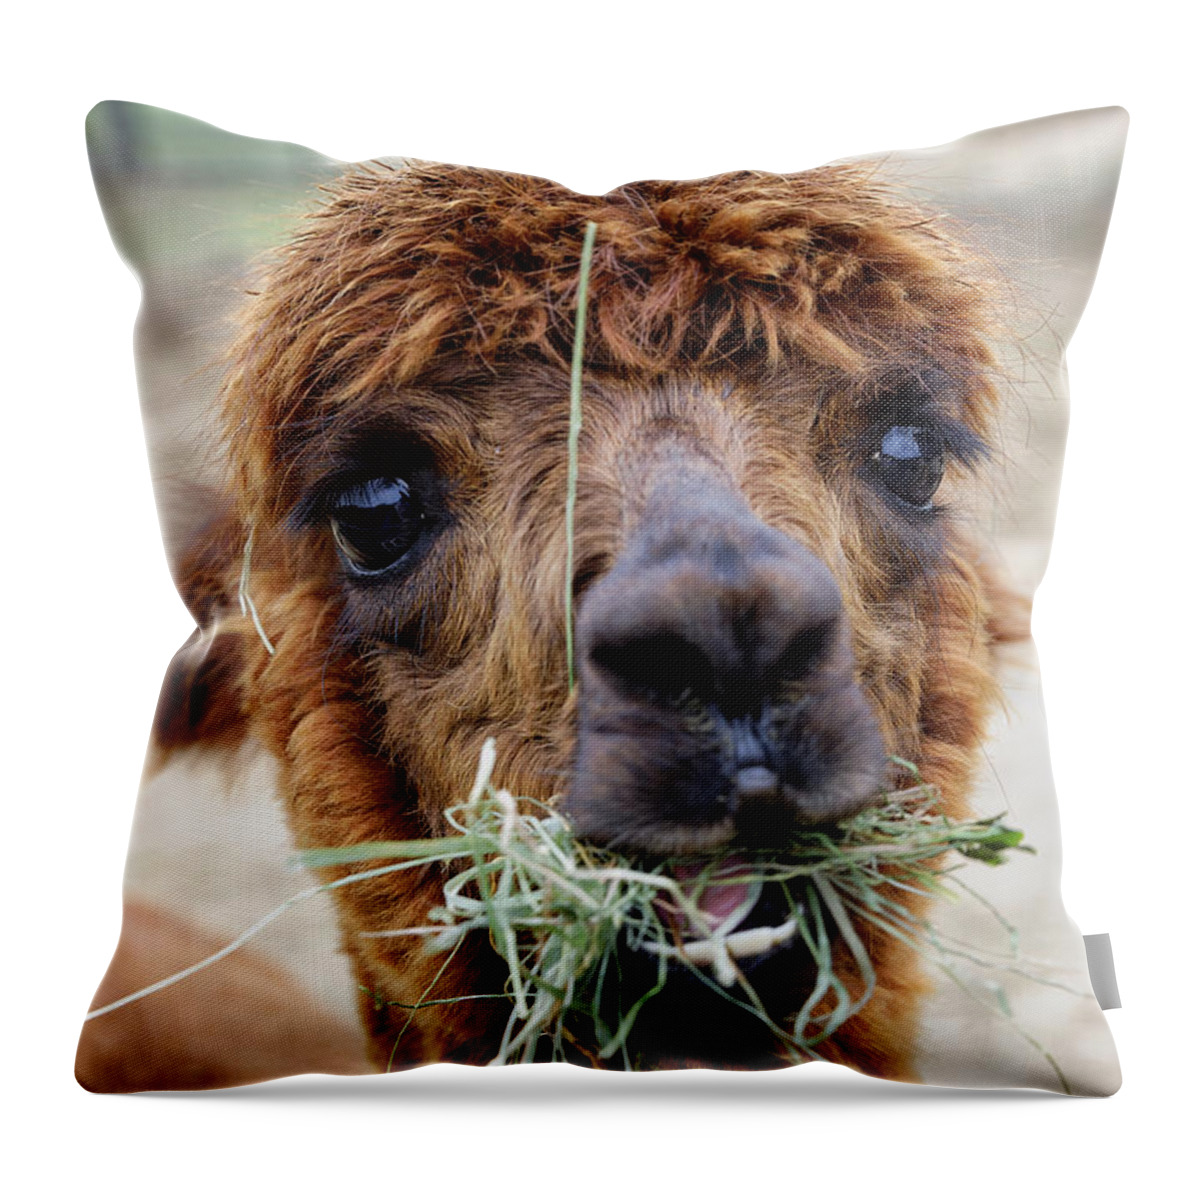 Alpacas Throw Pillow featuring the photograph Alpaca by John Greim